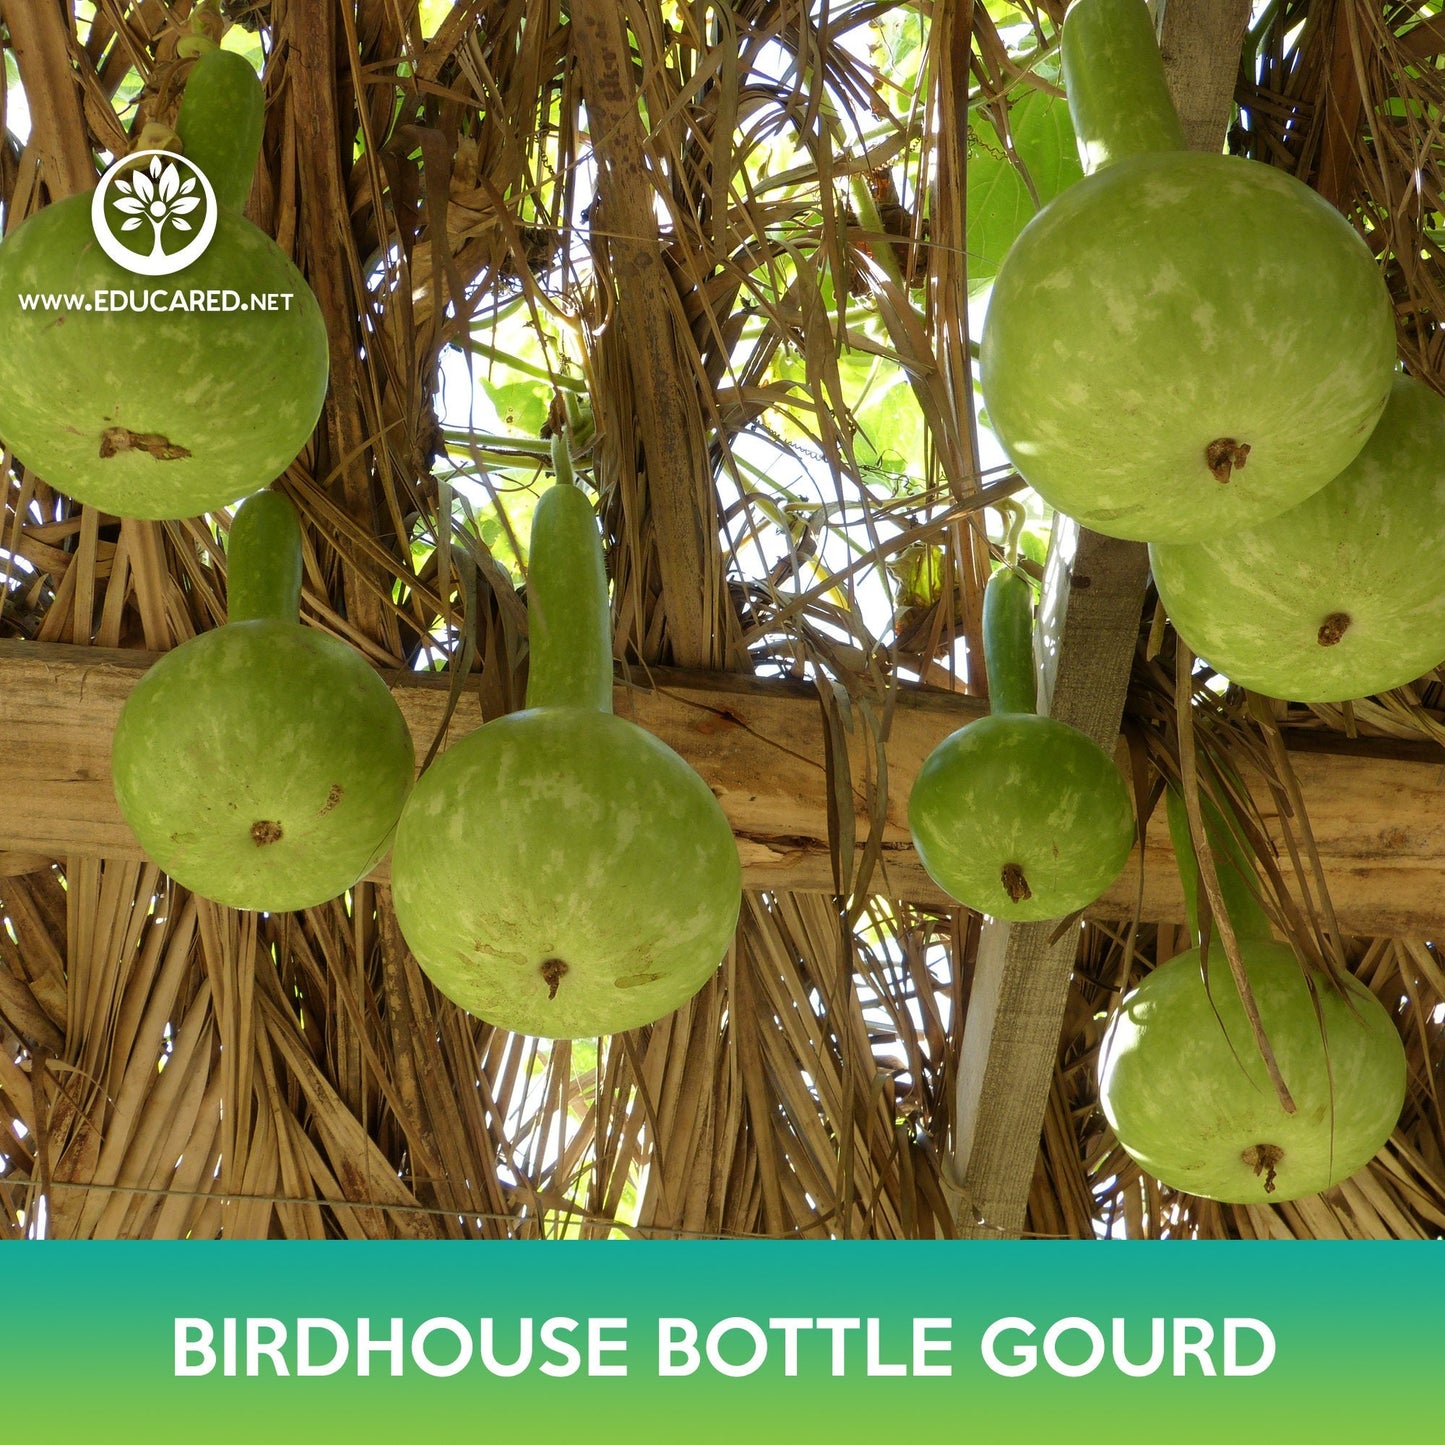 Birdhouse Bottle Gourd Seeds, Calabash